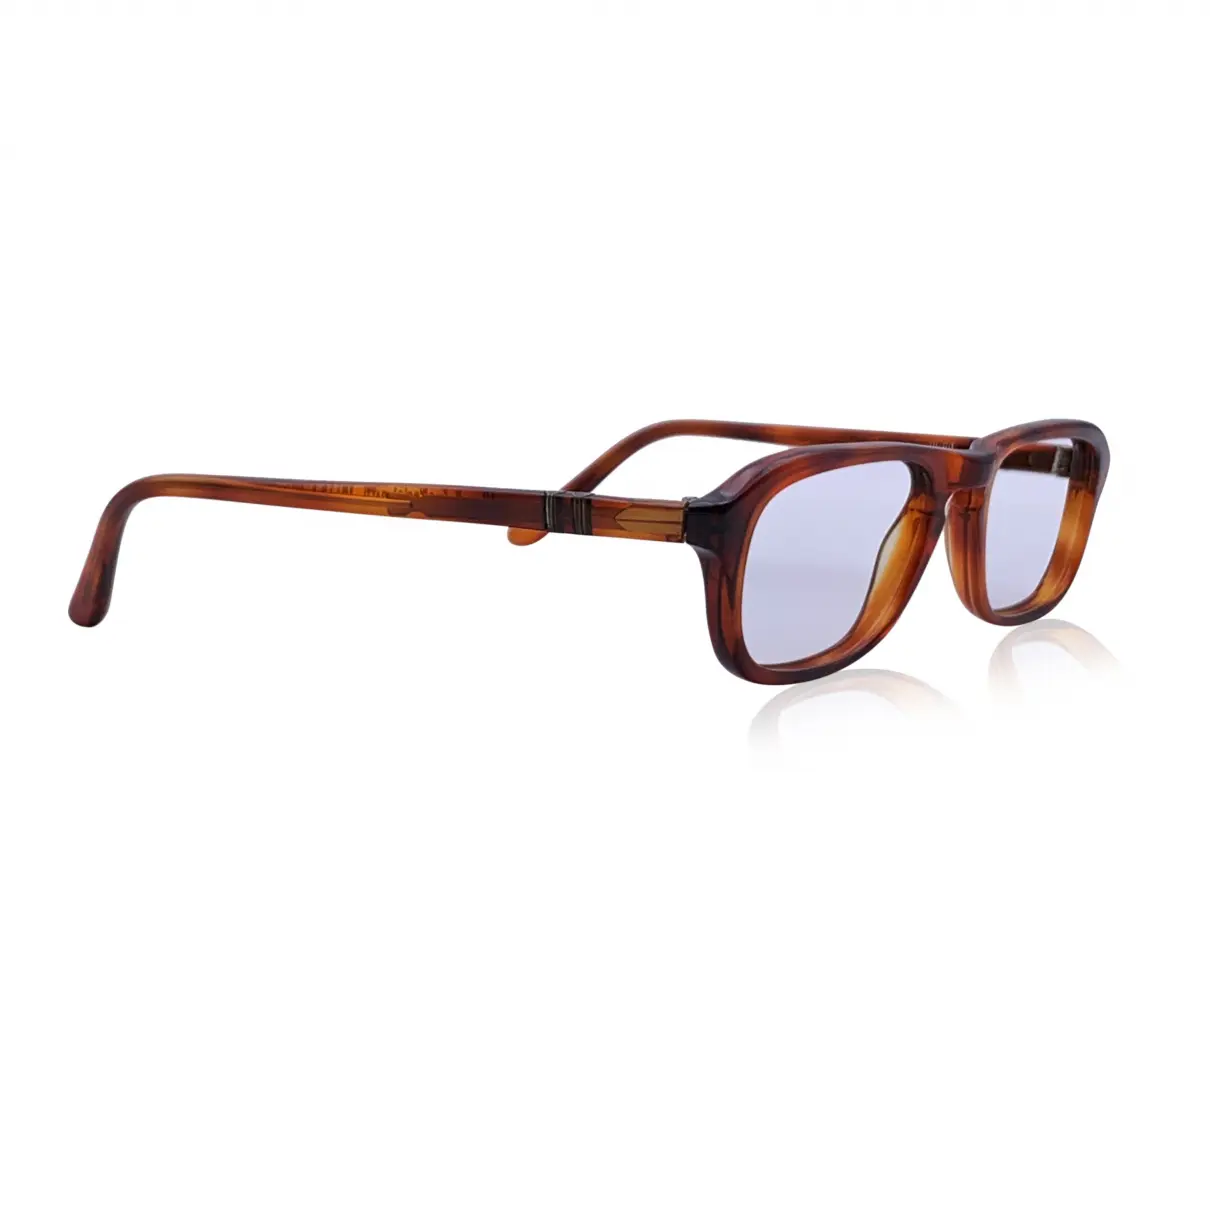 Buy Persol Sunglasses online